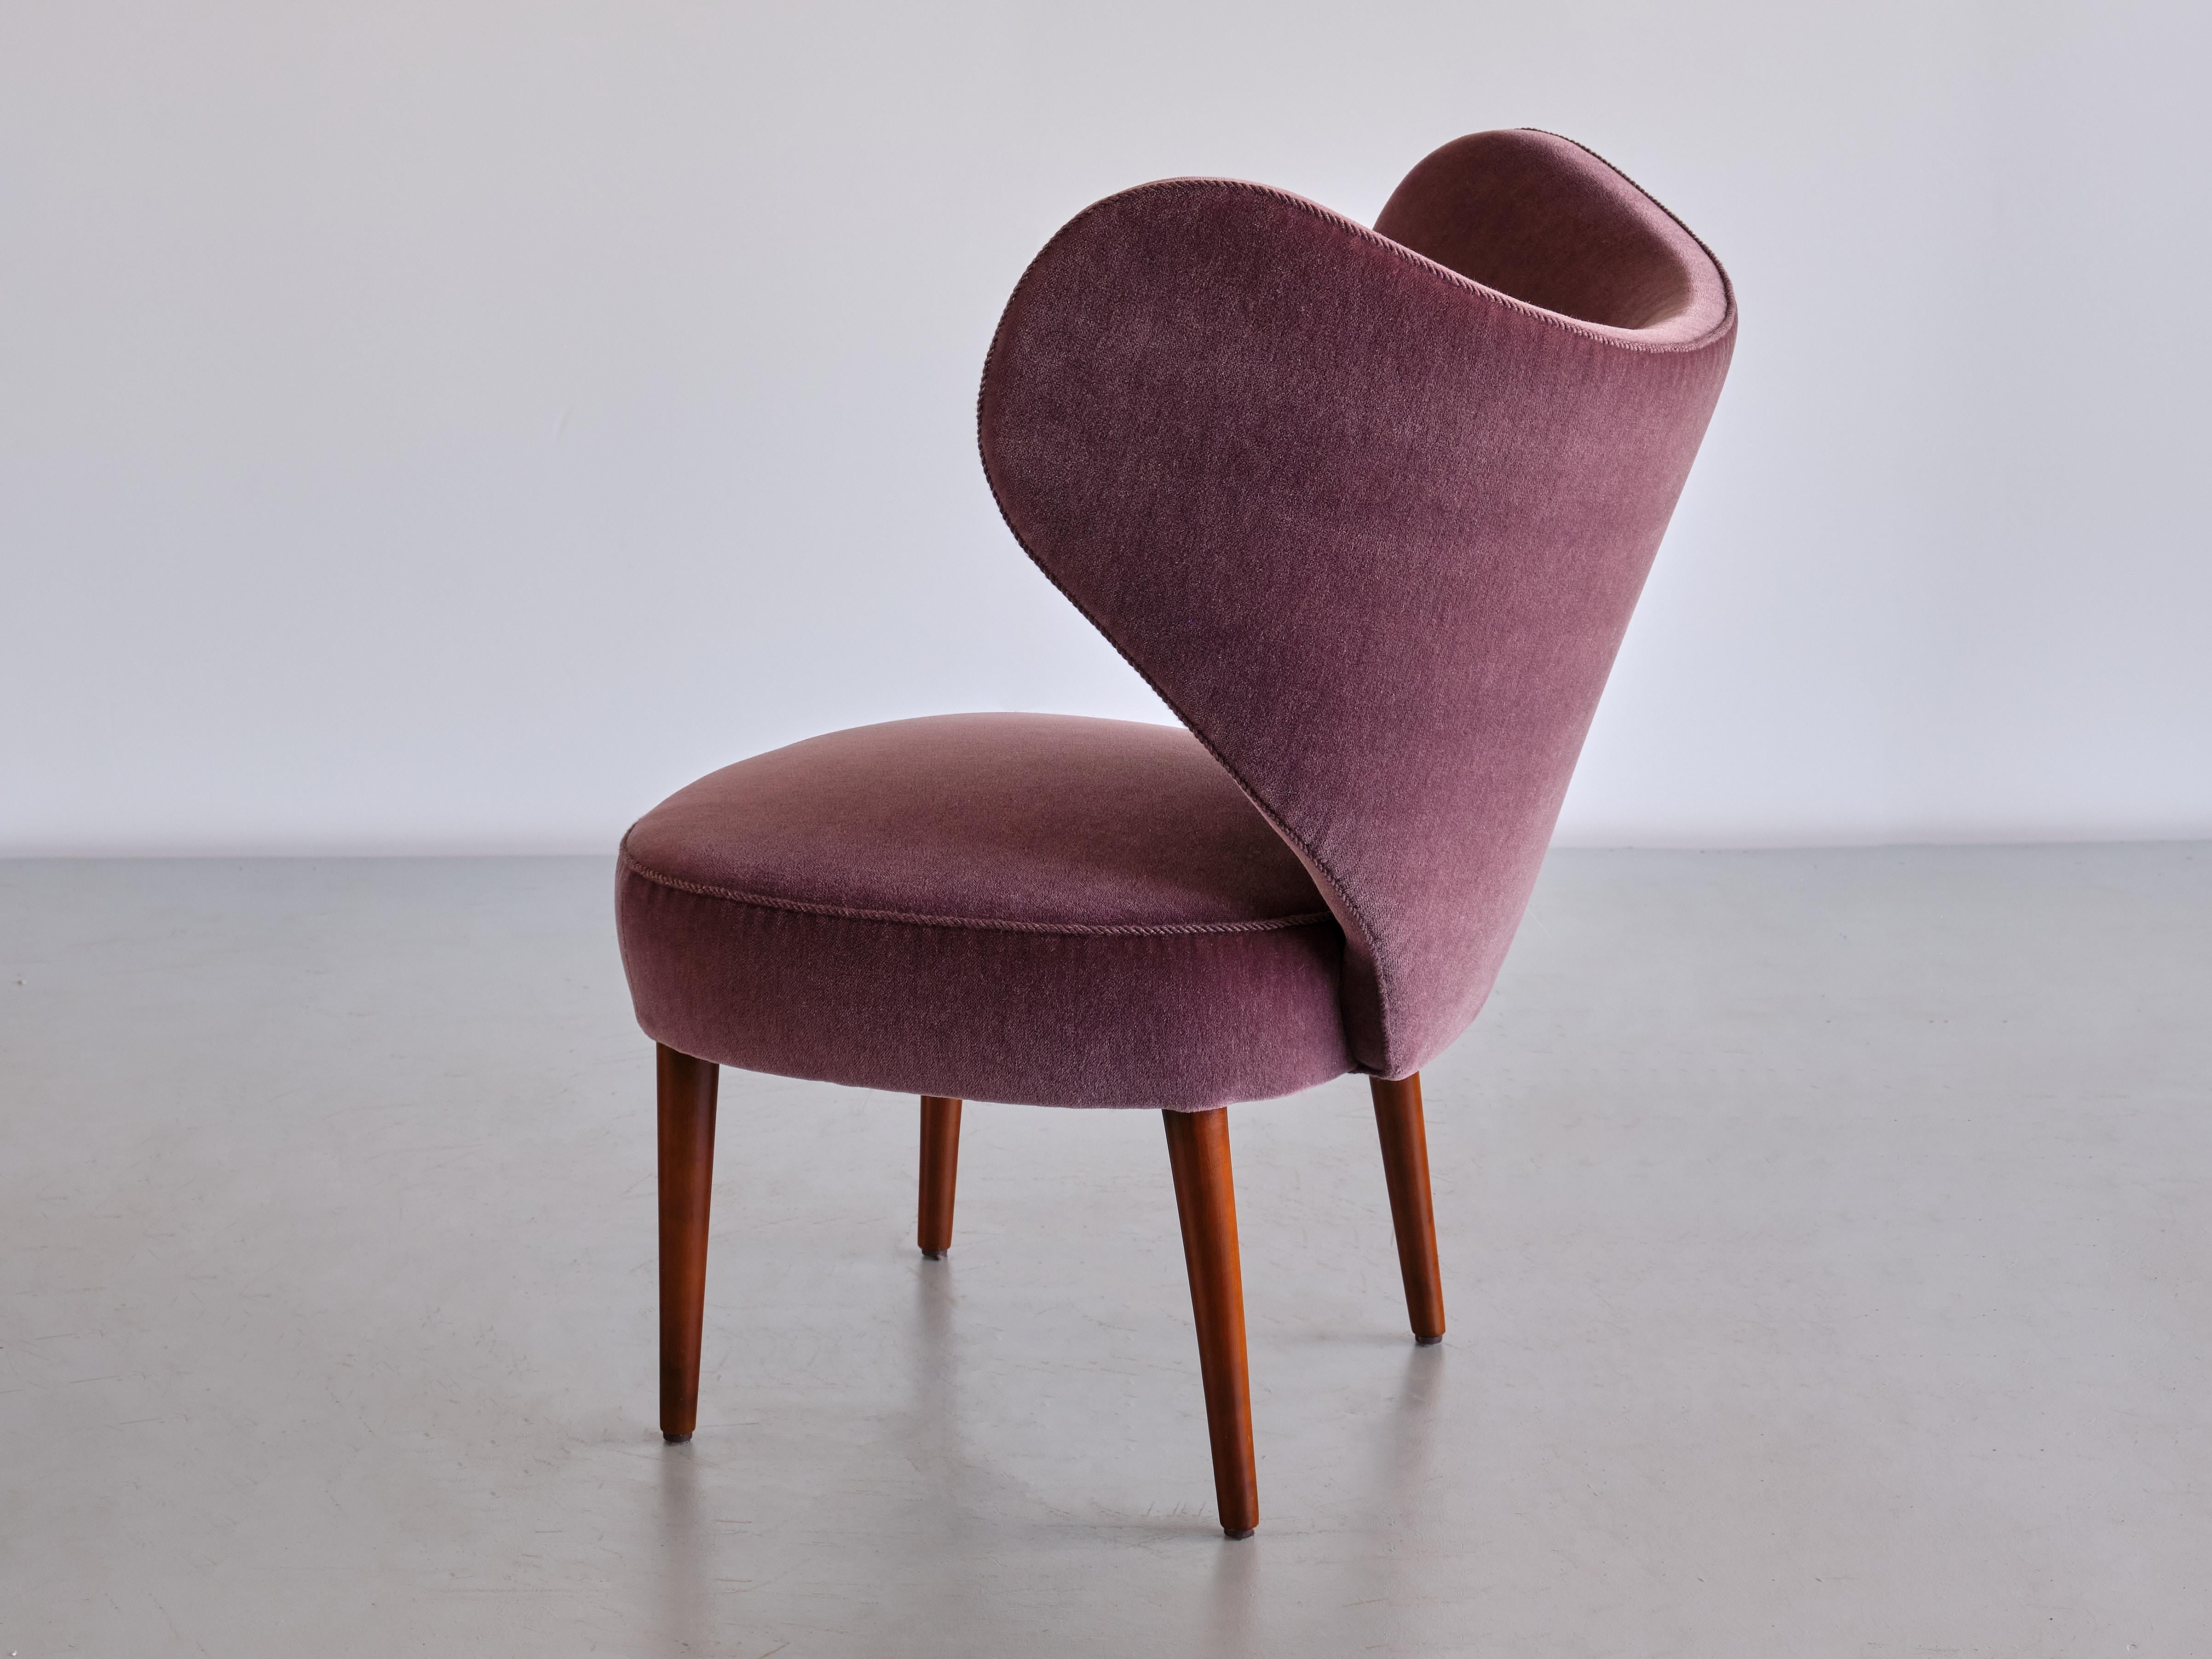 Exceptional 'Heart' Chair in Purple Mohair, Brøndbyøster Møbel, Denmark, 1953 For Sale 5